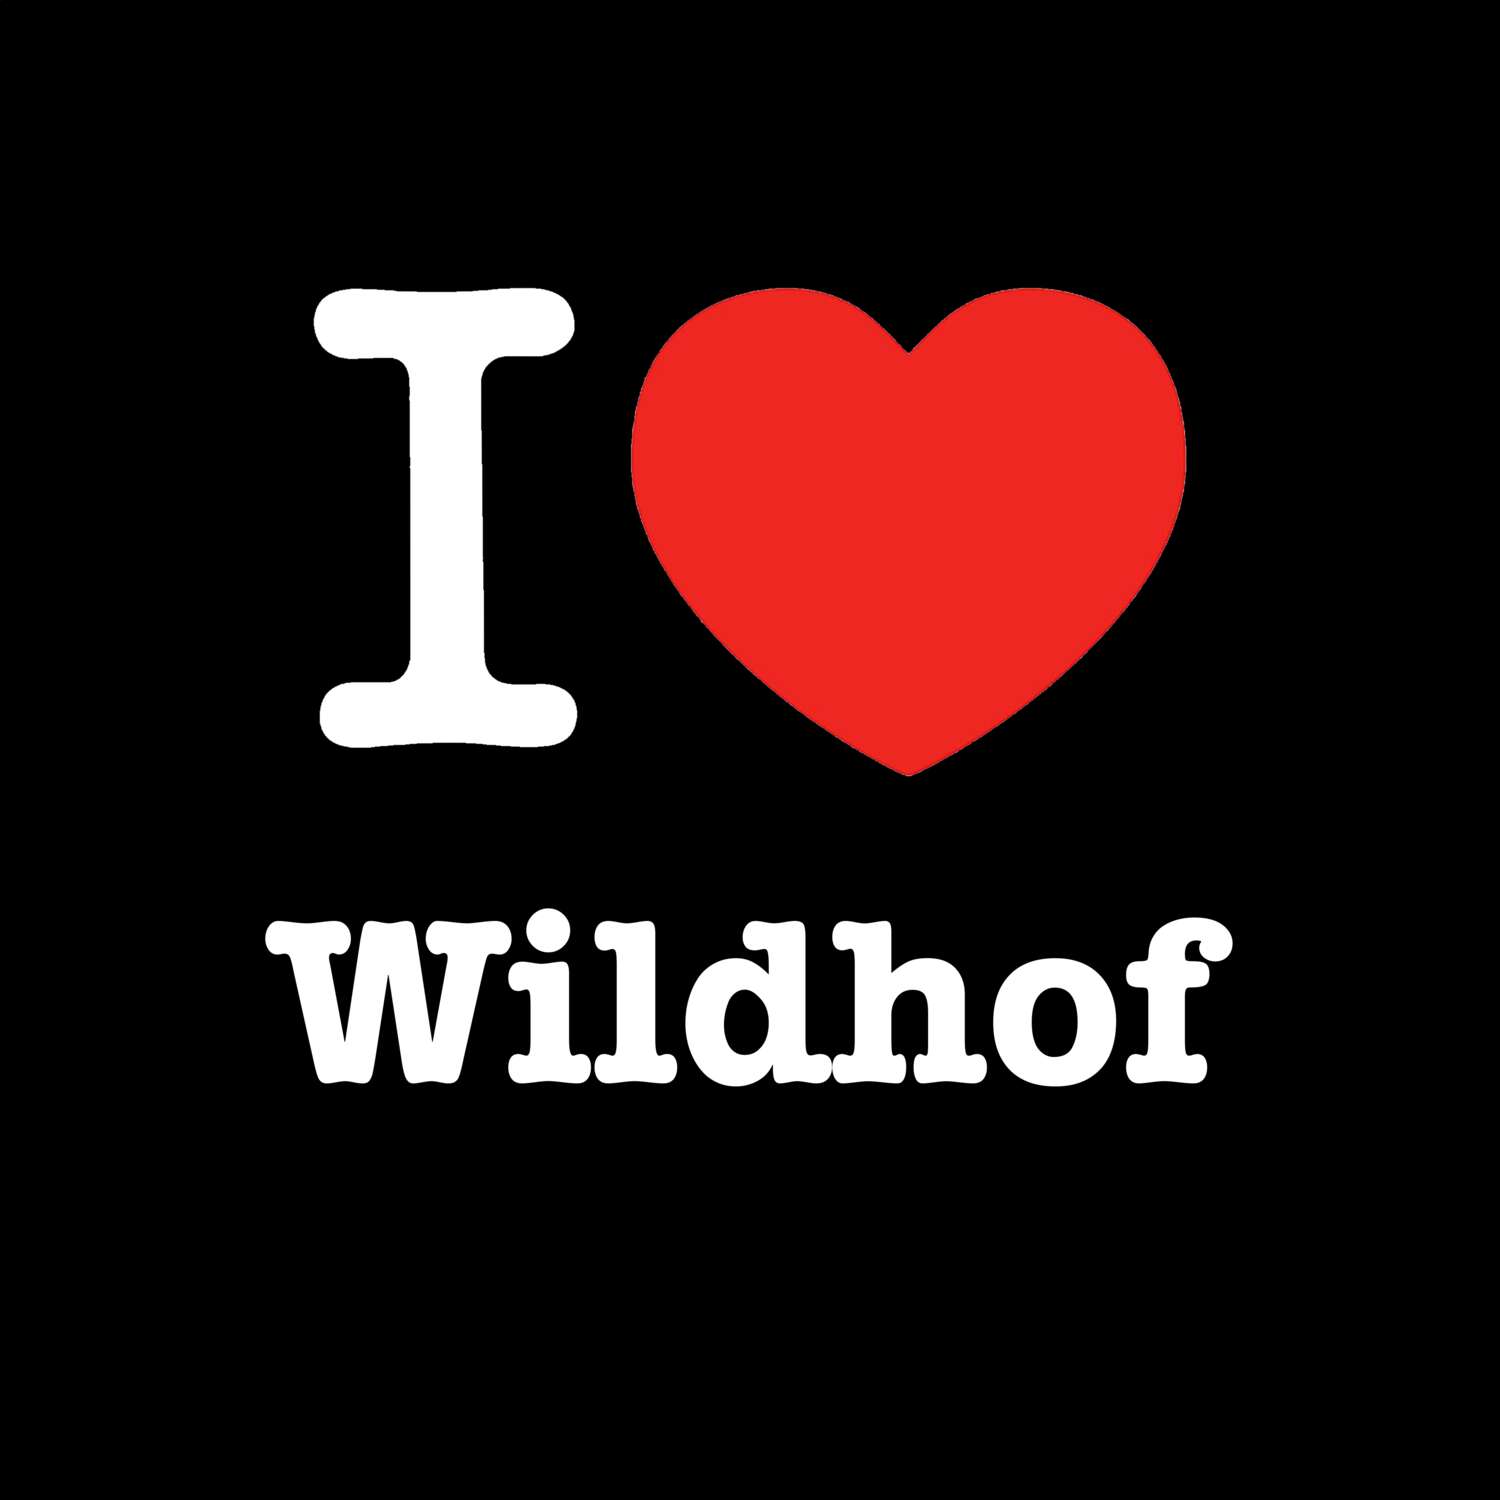 Wildhof T-Shirt »I love«